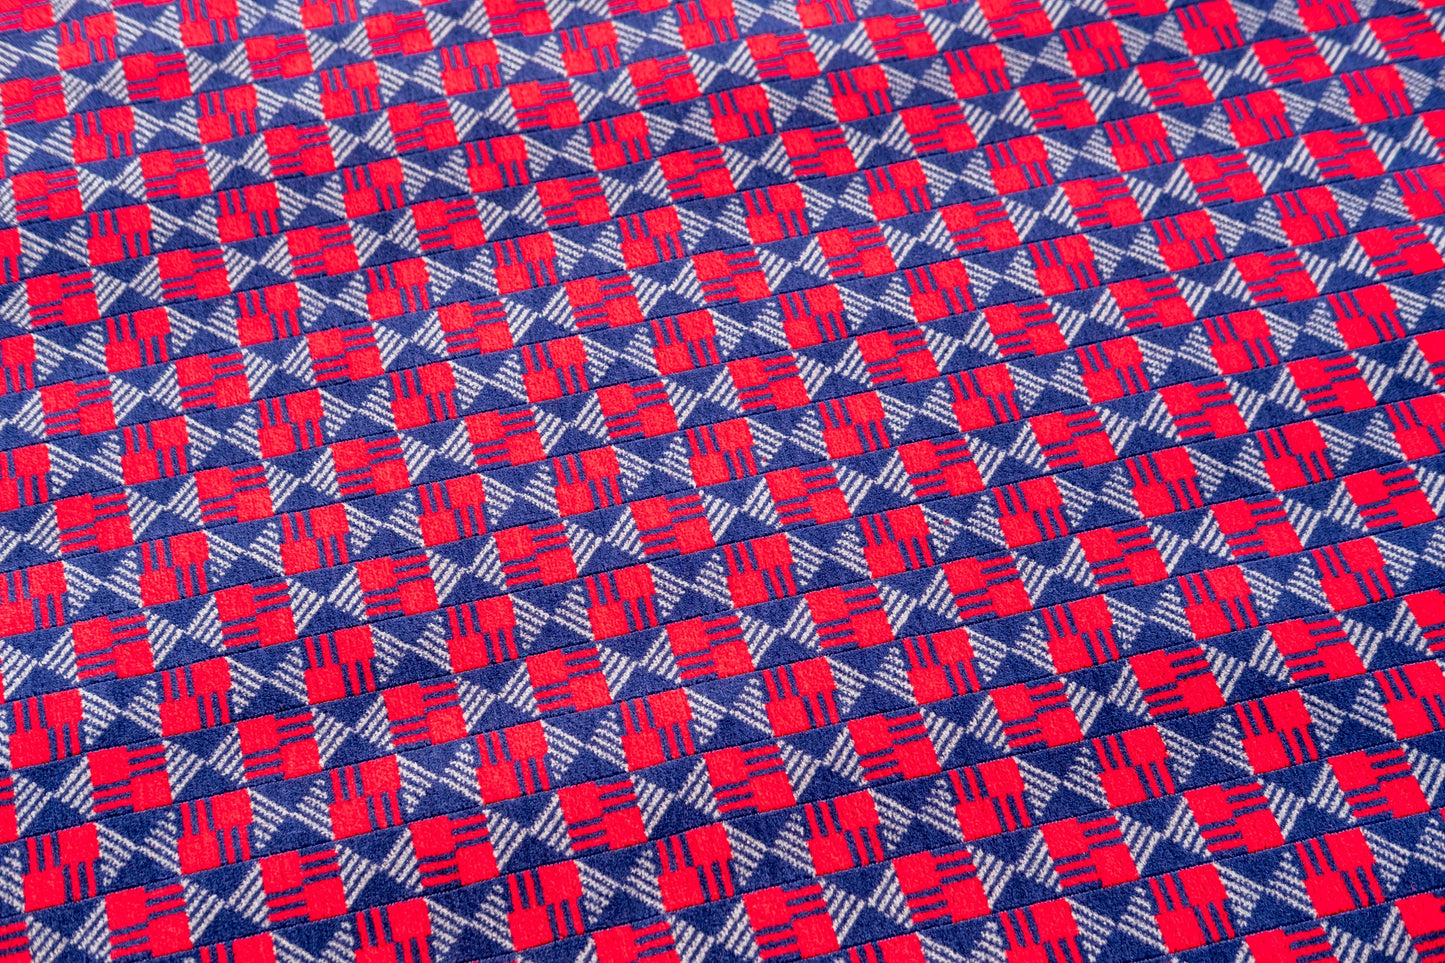 Custom Product using London Underground Central Line 1992 Moquette Fabric